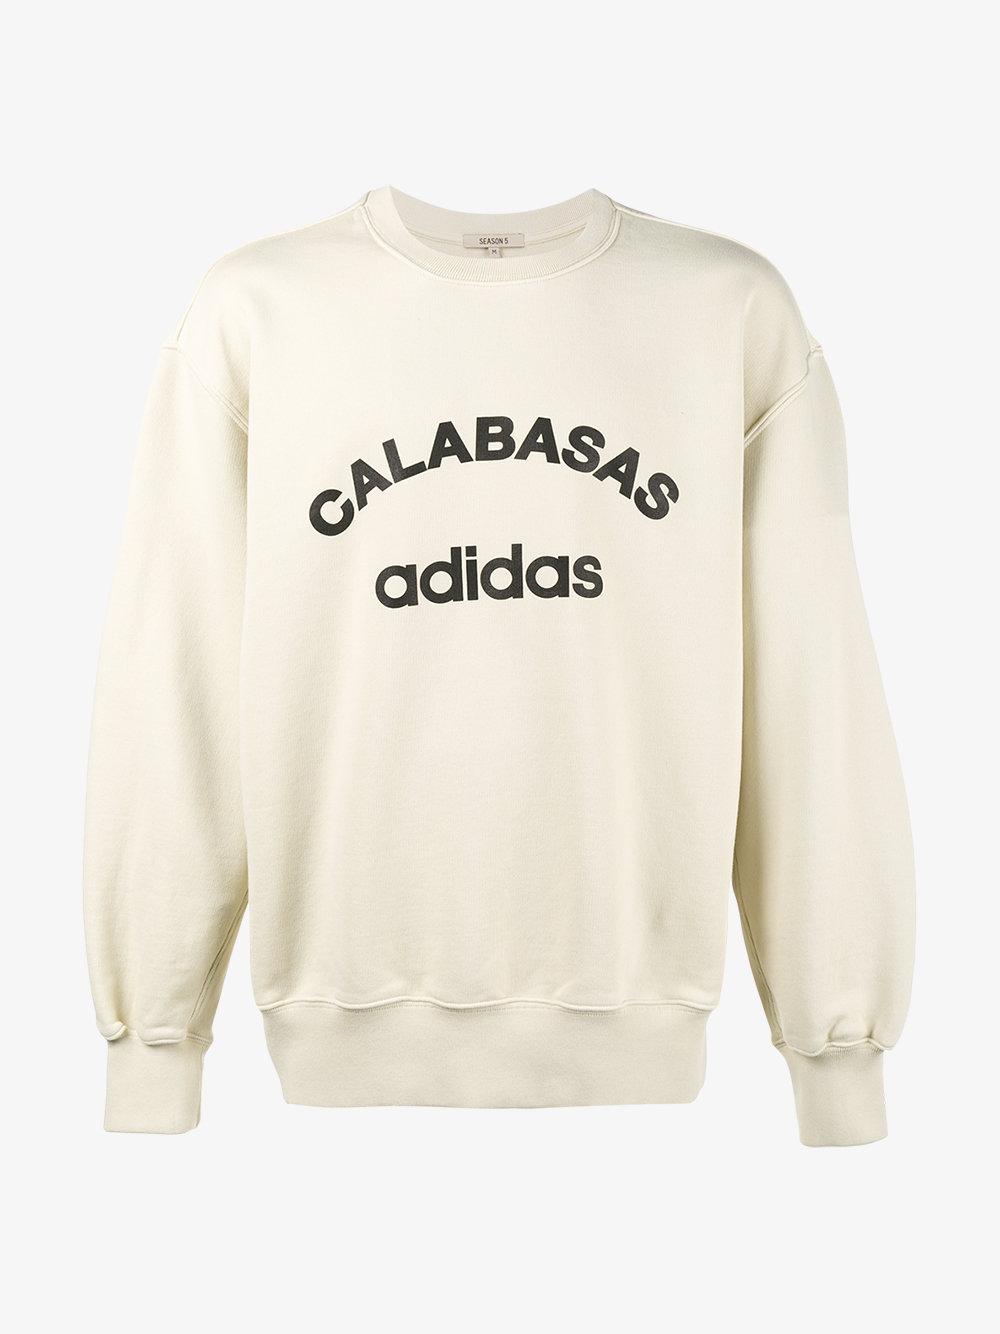 Yeezy Calabasas Adidas Sweatshirt in Natural for Men | Lyst Australia